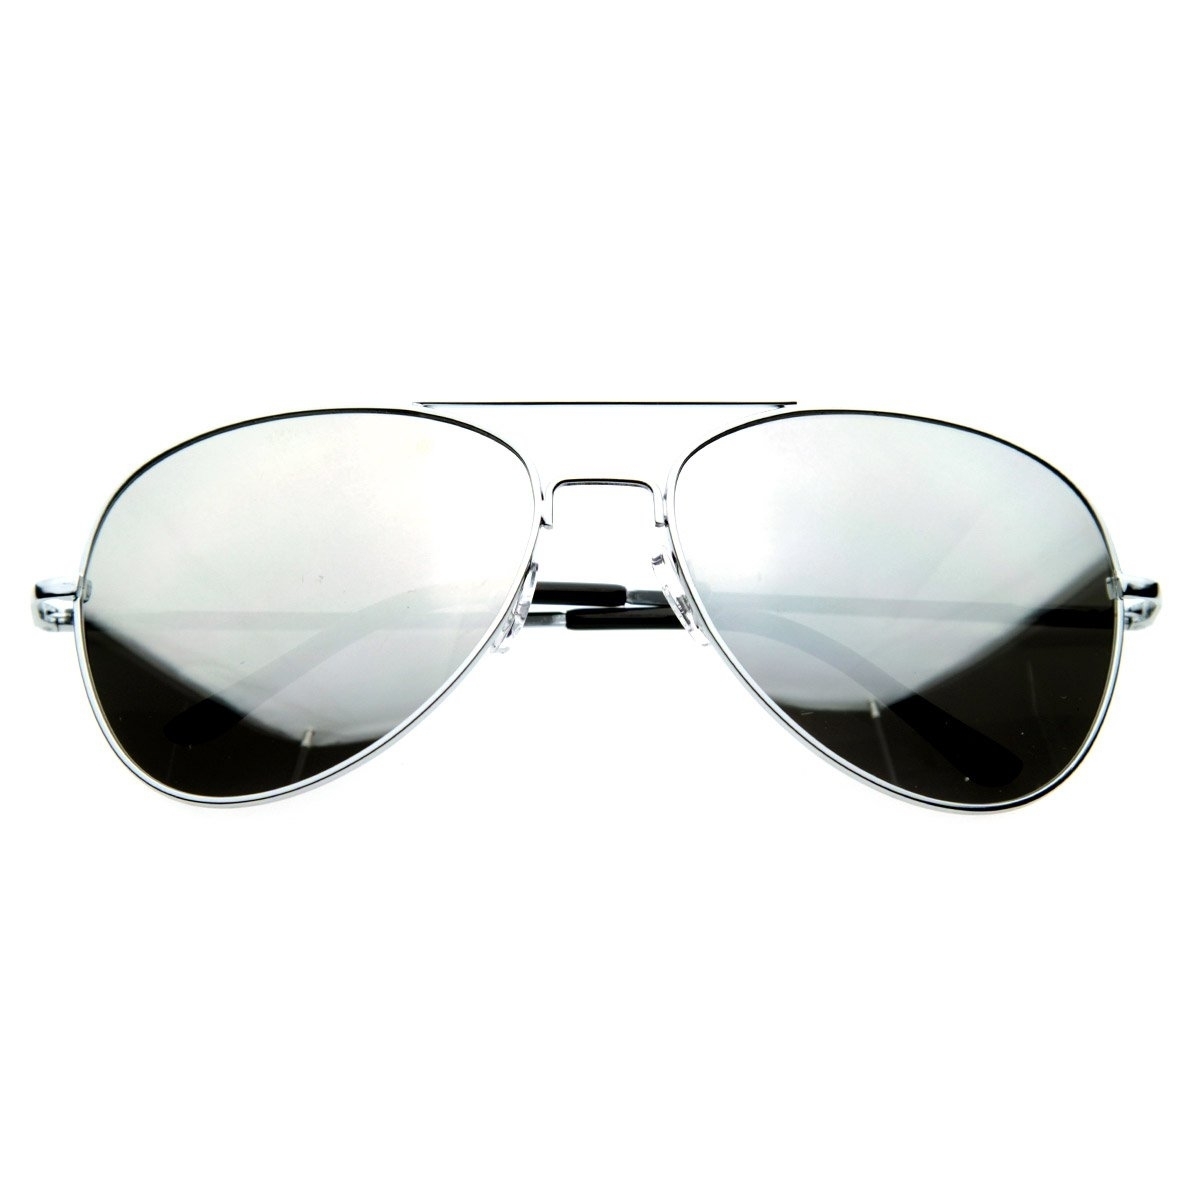 Premium Mirrored Aviator Top Gun Sunglasses W/ Spring Loaded Temples - Gunmetal Each